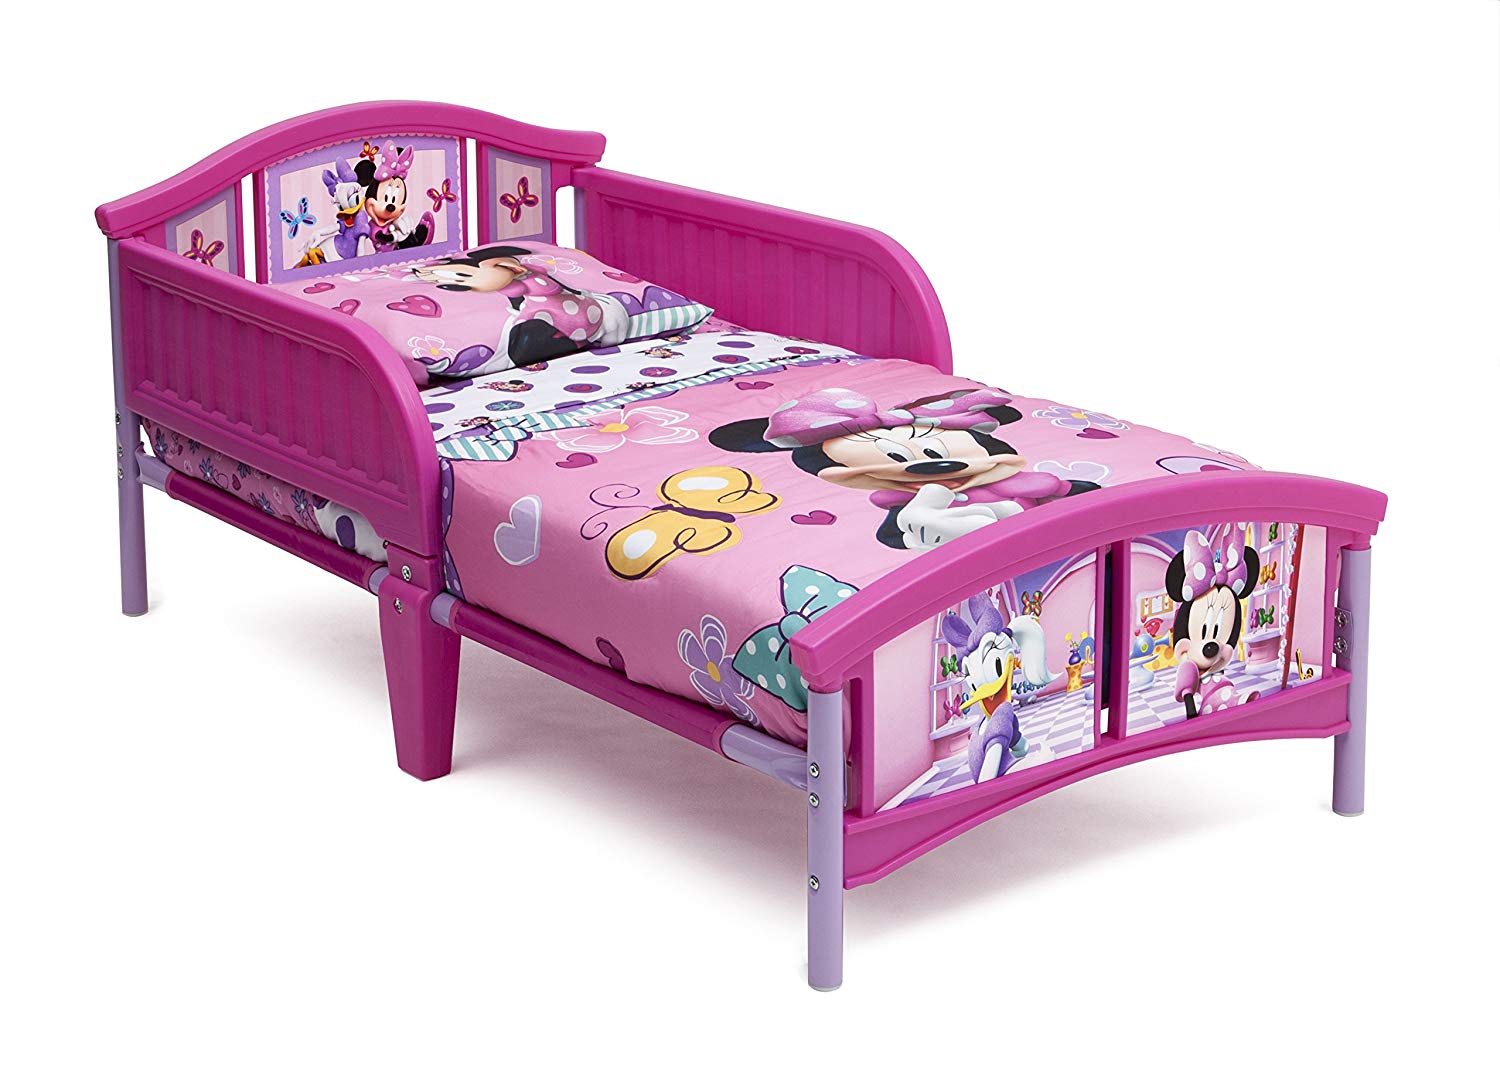 Children's bed amazon.com: Delta Children's Plastic Toddler Bed, Disney Minnie Mouse: Baby VPWWJLH